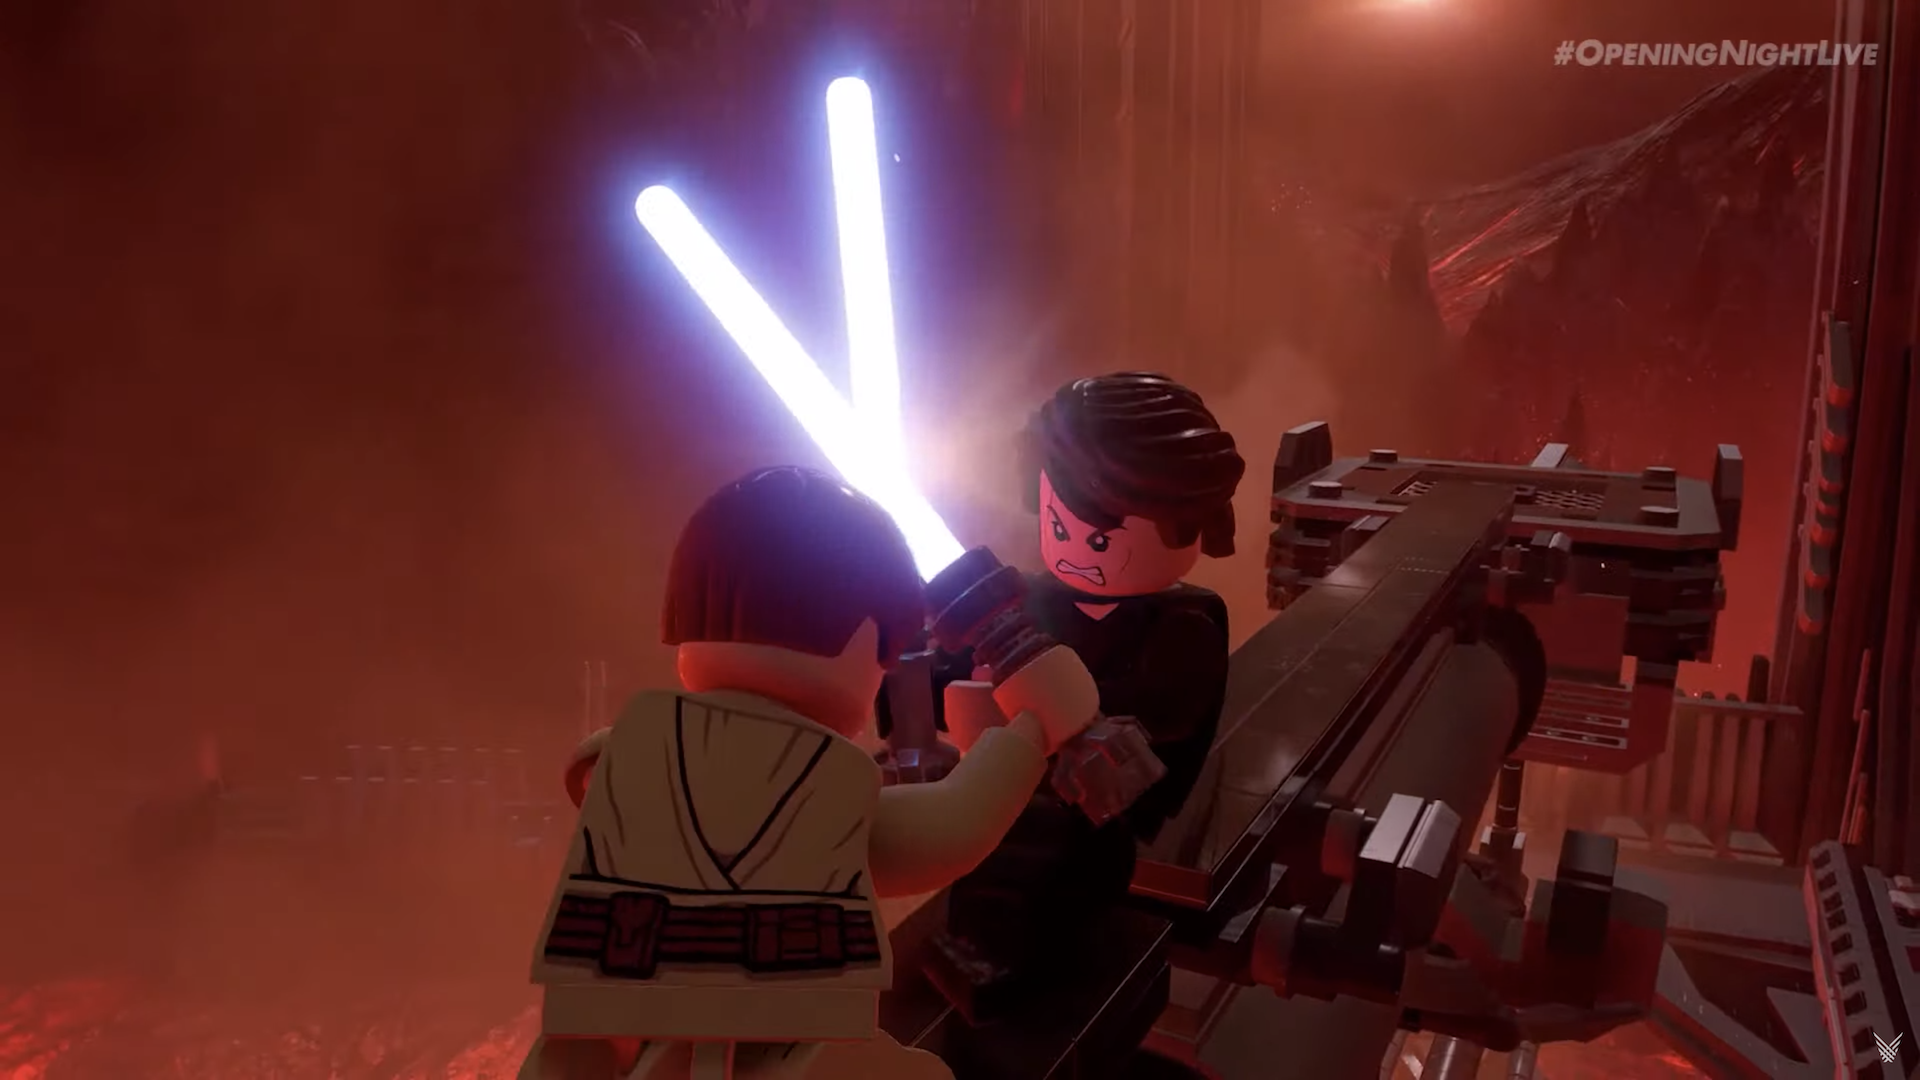 Is Lego Star Wars: The Skywalker Saga an open-world game?